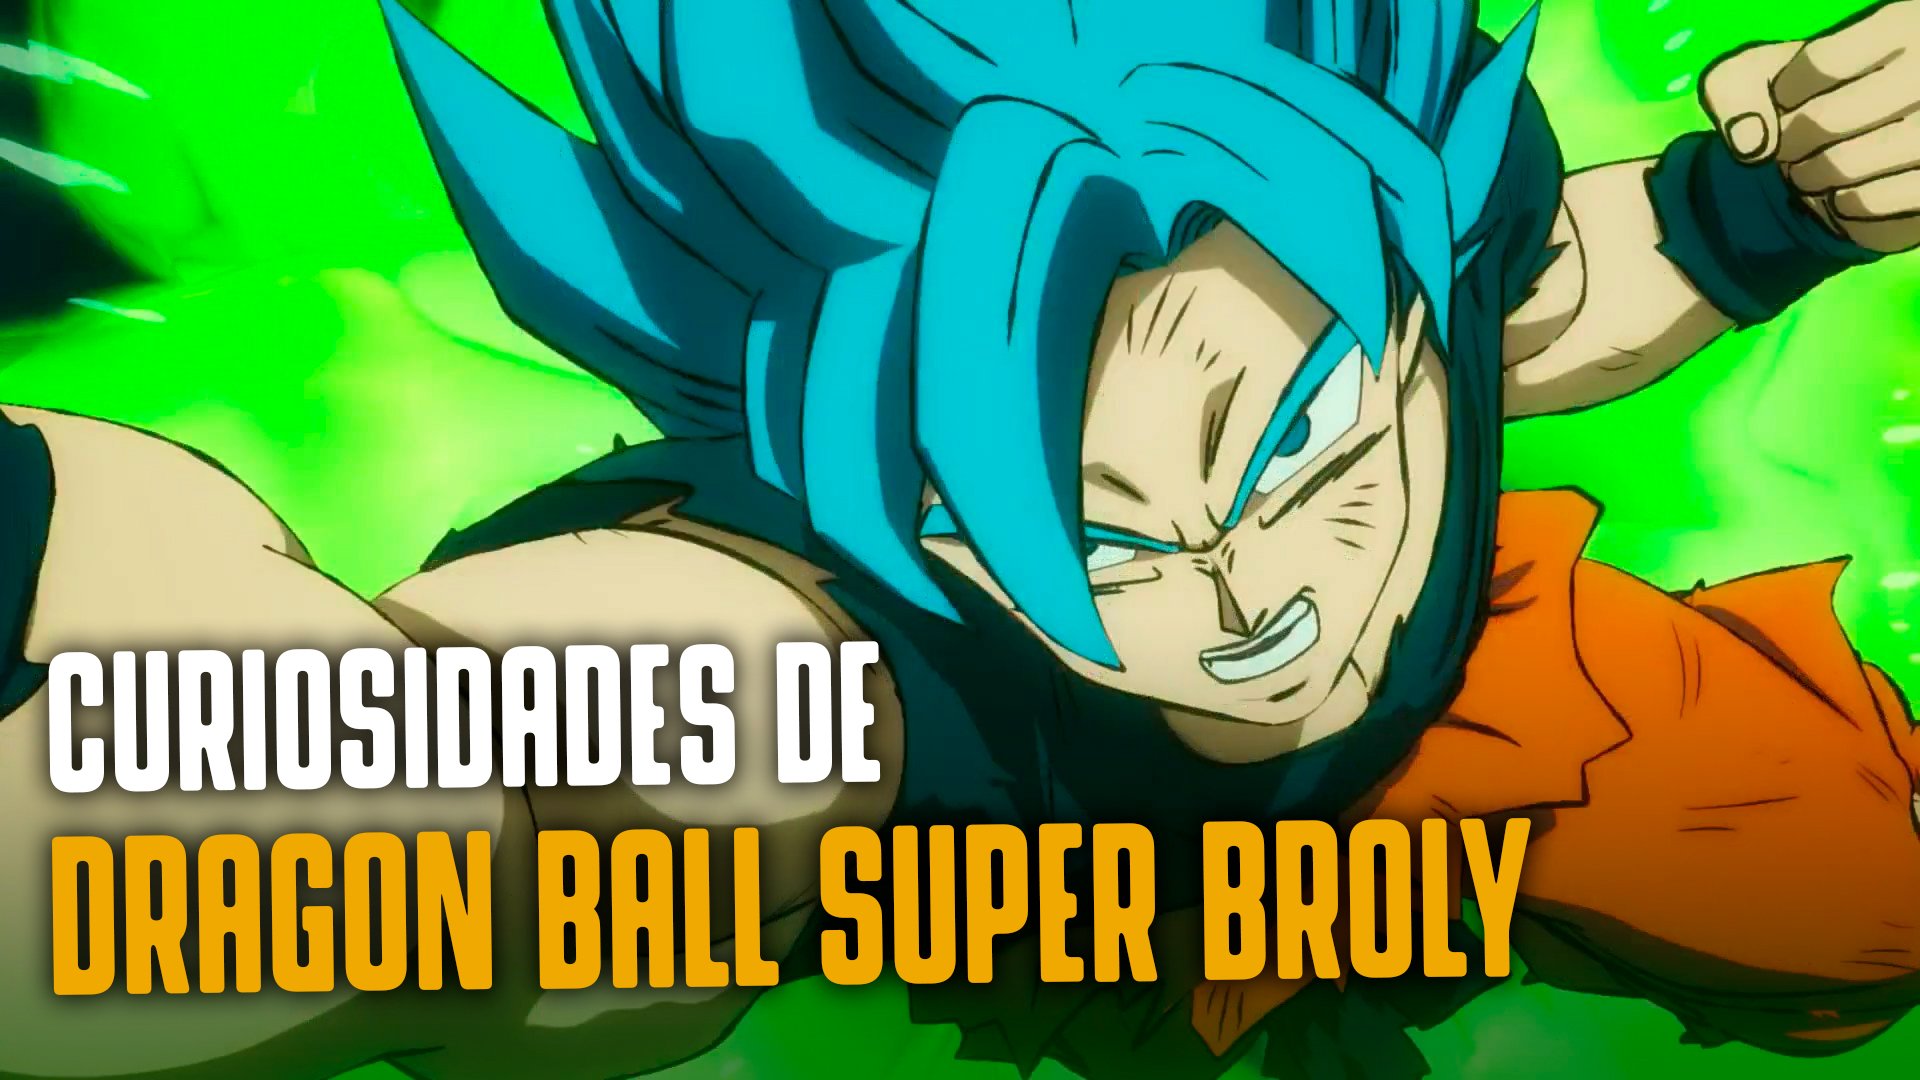 Crunchyroll anuncia estreia mundial de Dragon Ball Super: Super Hero